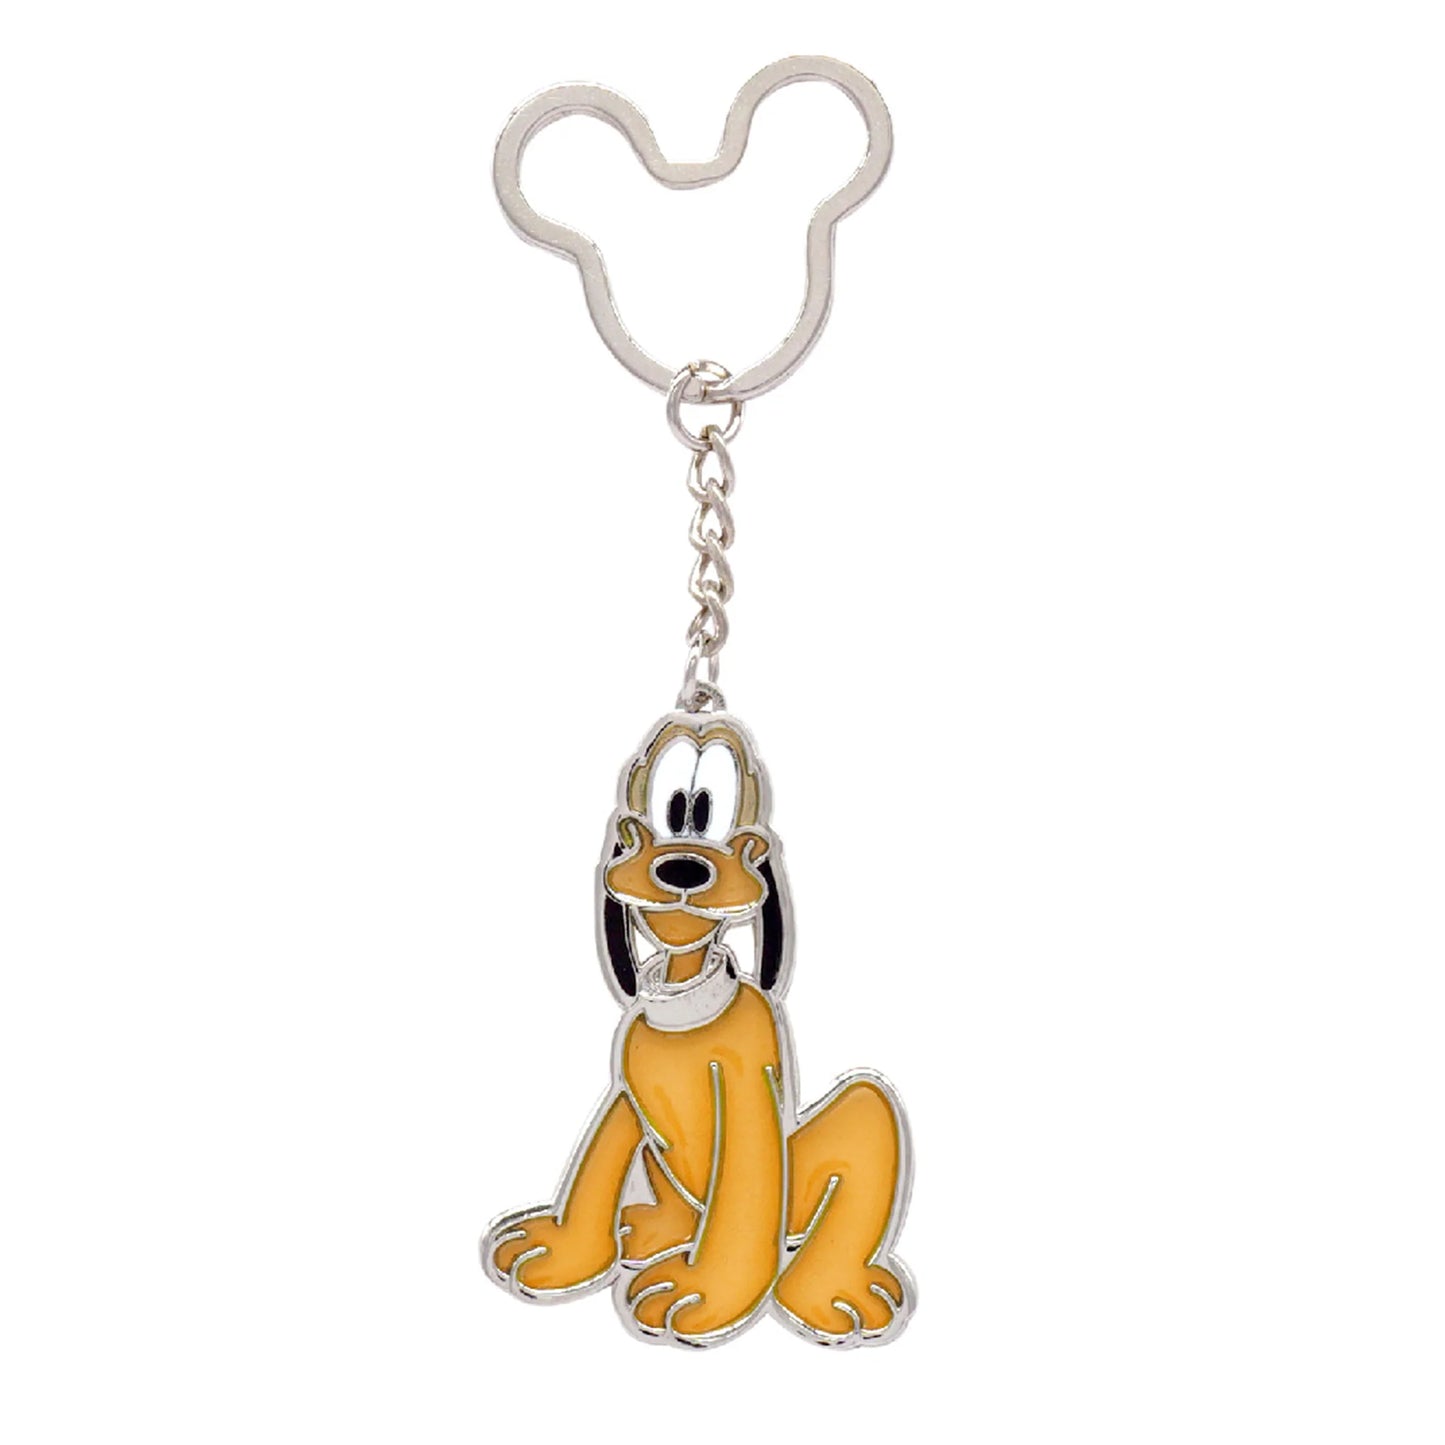 Pewter Key Ring/Chain - Disney Mickey Gang - Pluto